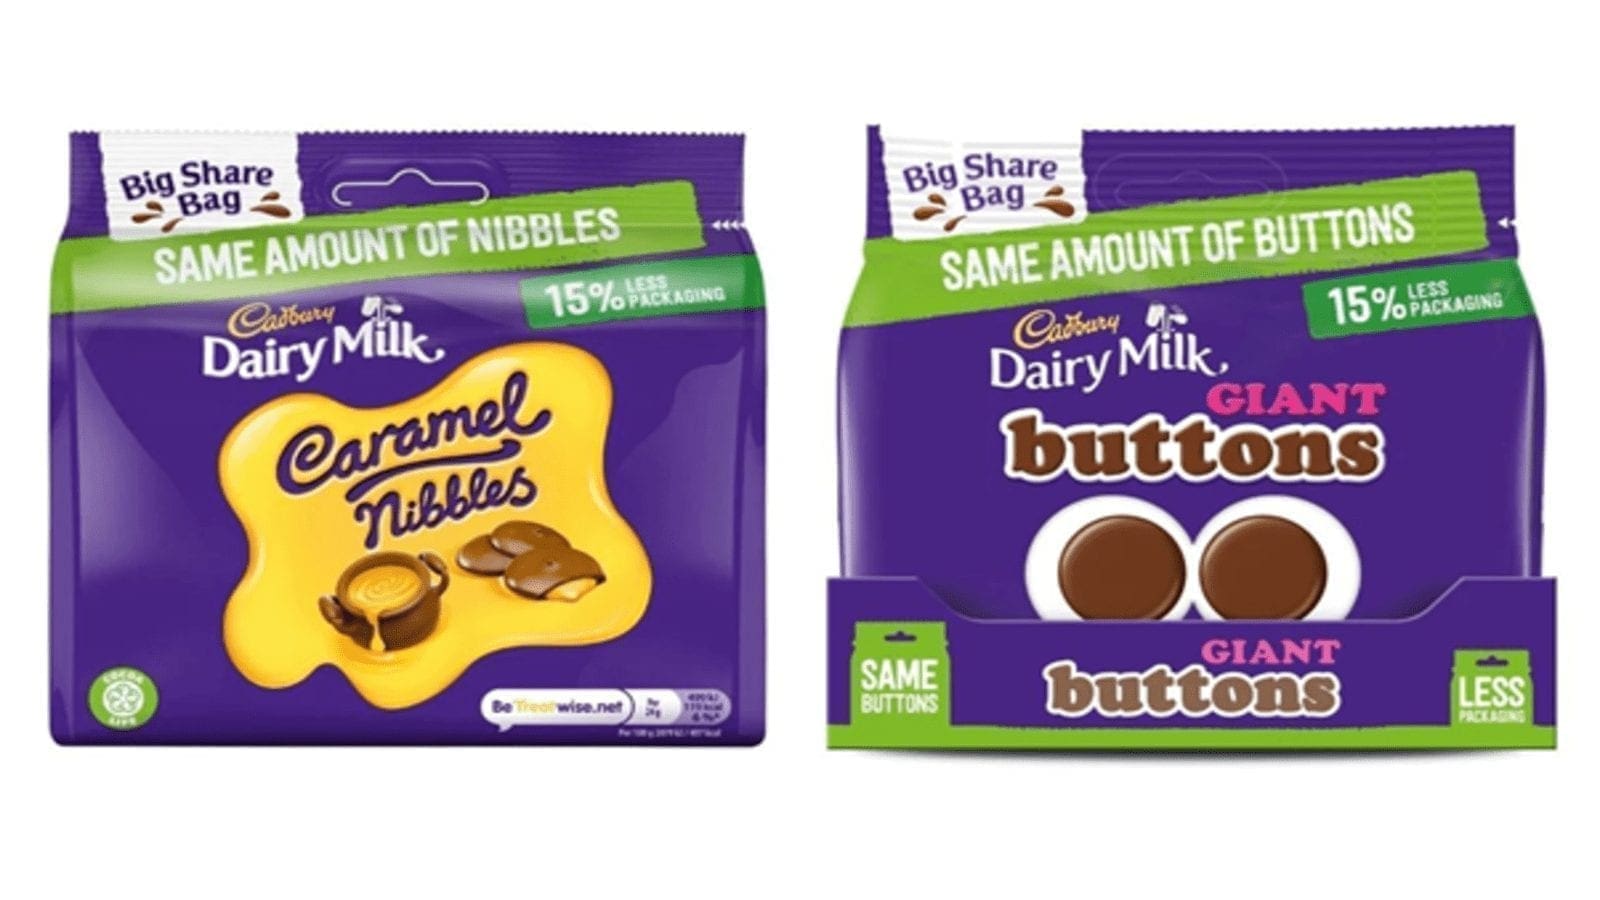 Mondelēz International to reduce the size of Cadbury share bags by 15%